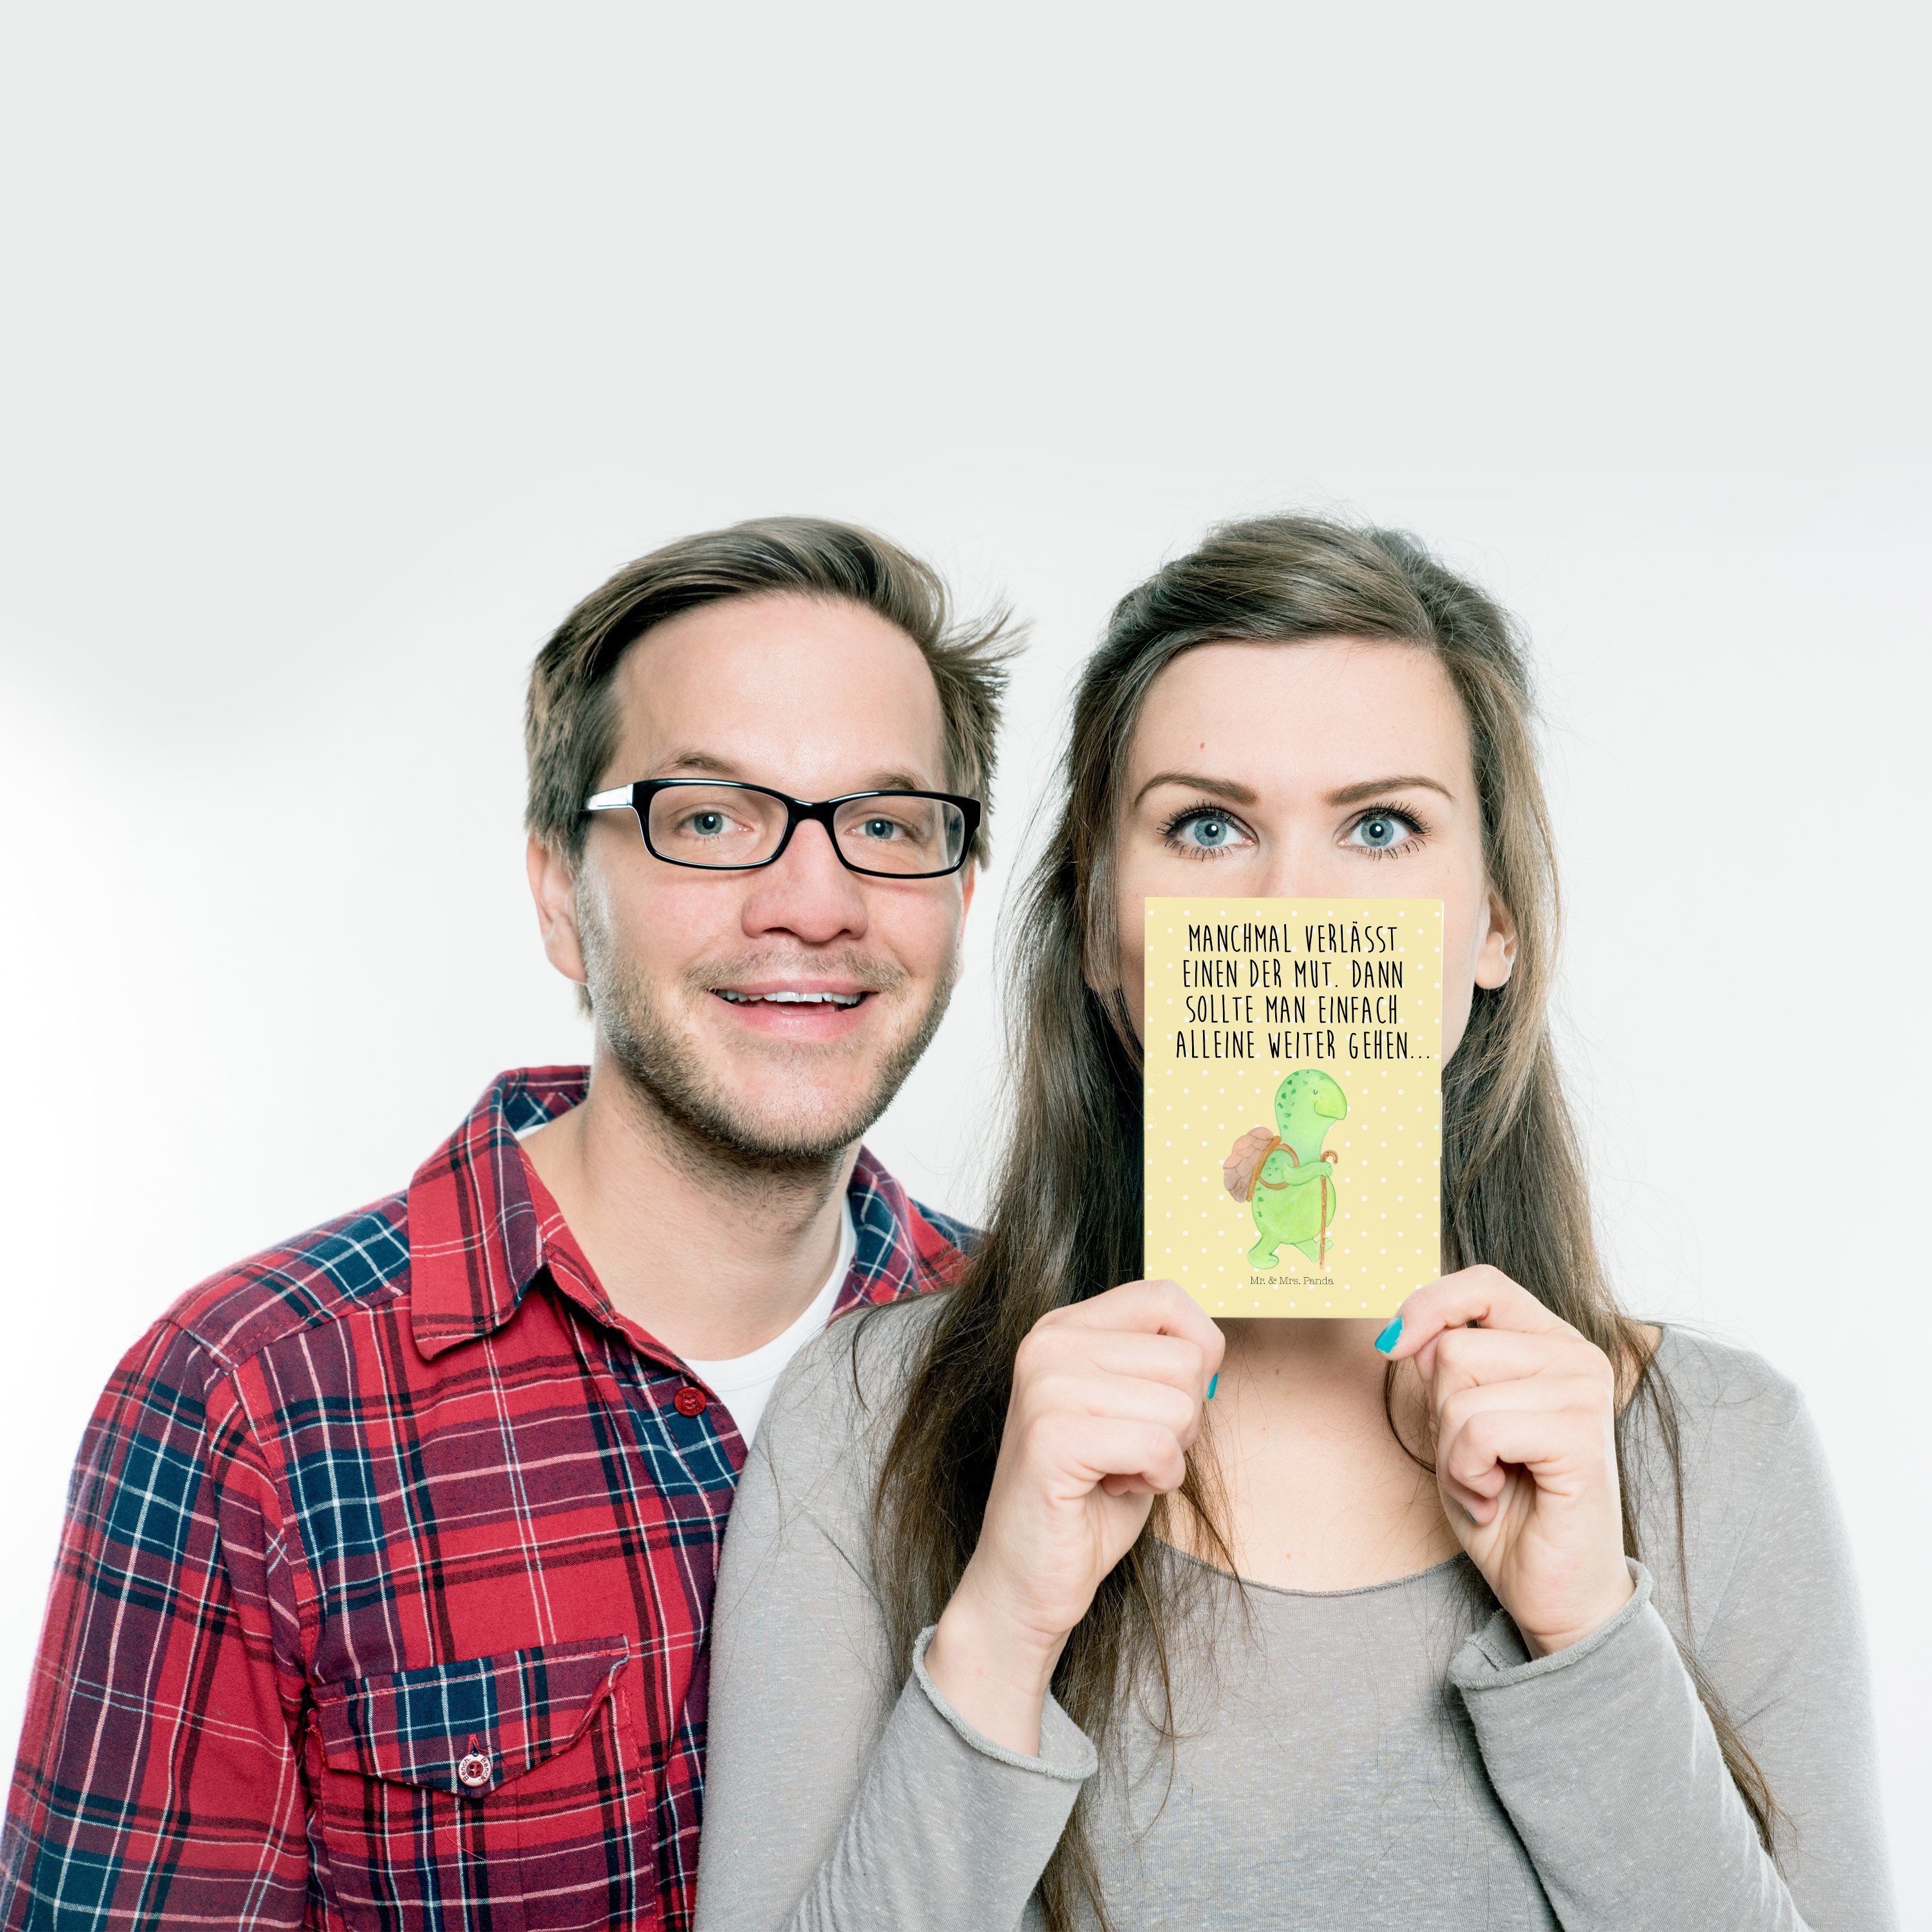 Mr. & Mrs. - - Geschenk, Postkarte Pastell Schildkröte Gelb Panda Mot Geburtstagskarte, Wanderer